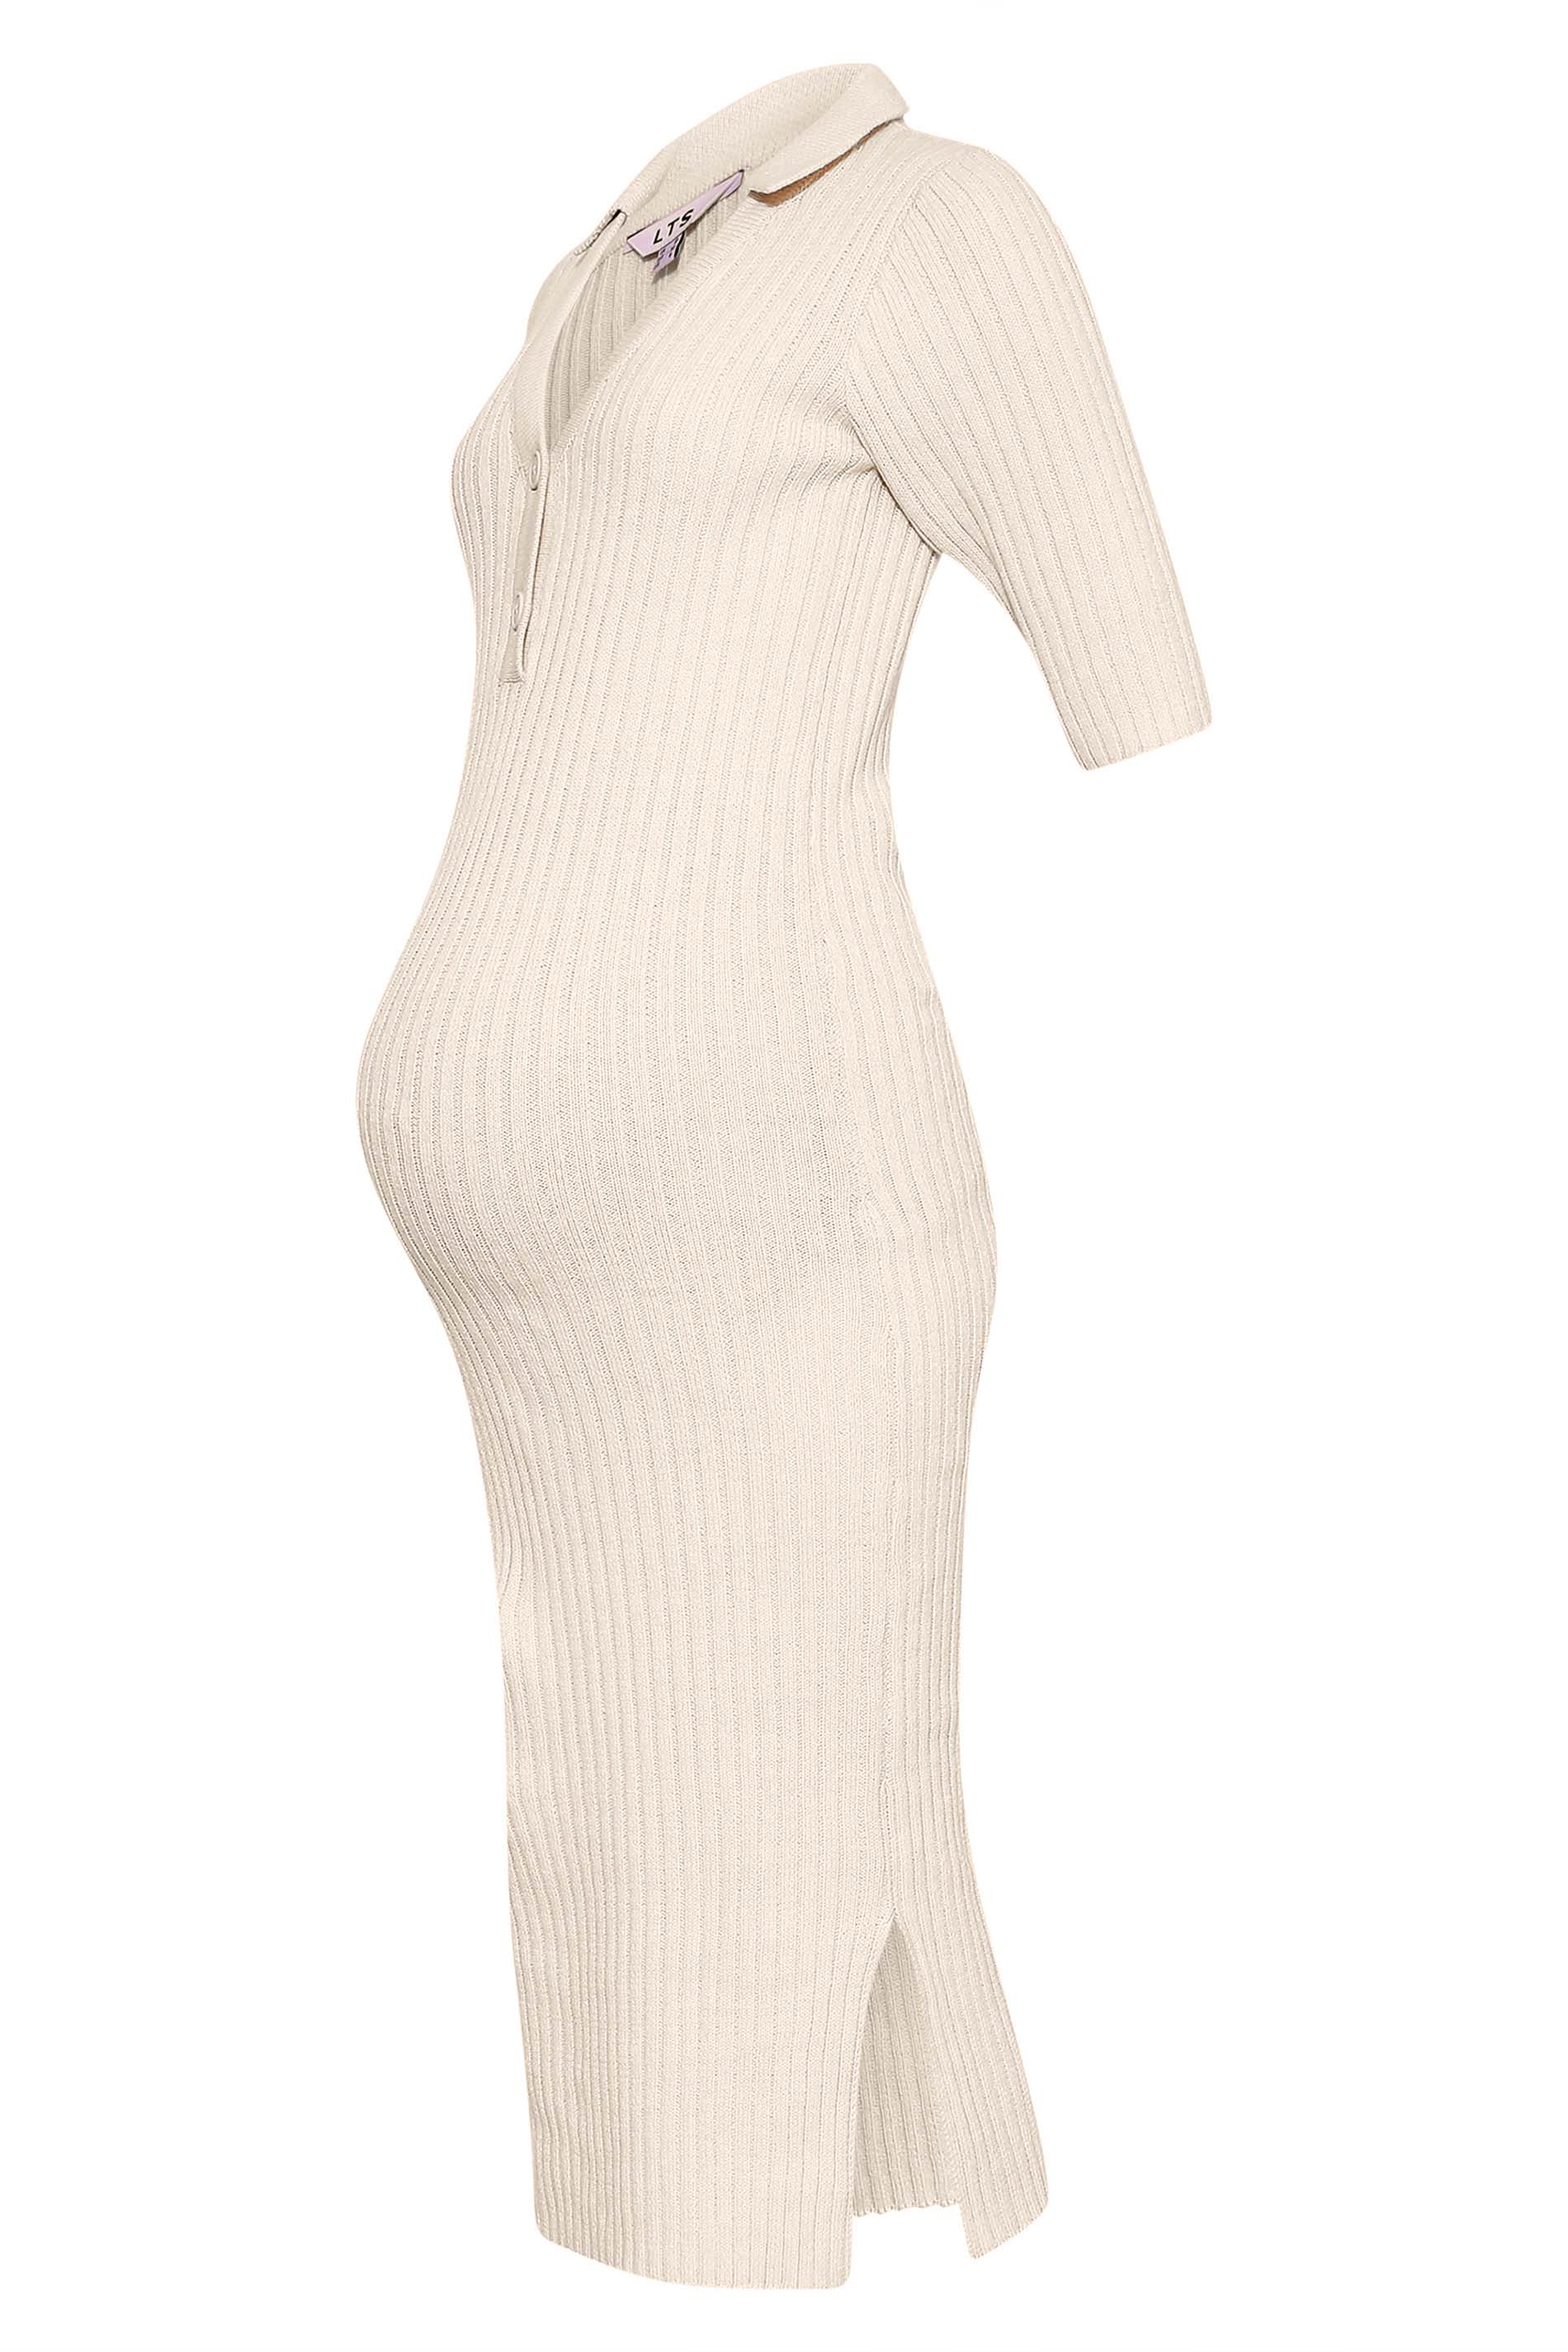 LTS Tall Women's Maternity Cream Knitted Midaxi Dress | Long Tall Sally  2